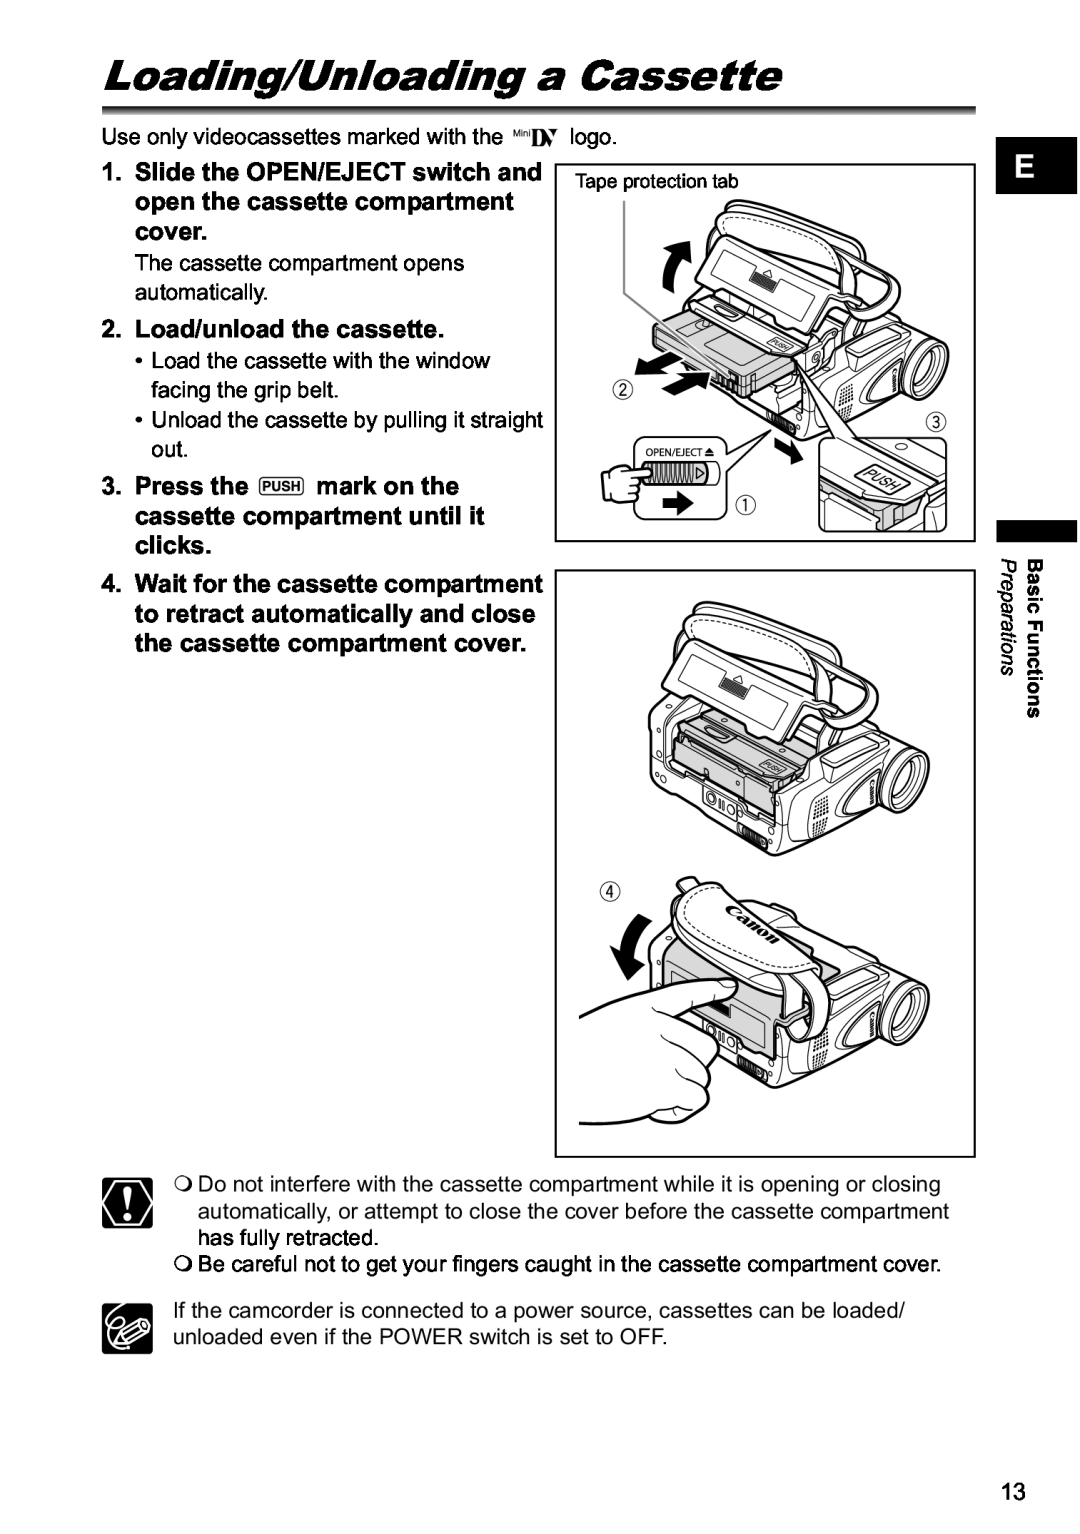 Canon MV800i, MV790 instruction manual Loading/Unloading a Cassette, Load/unload the cassette 